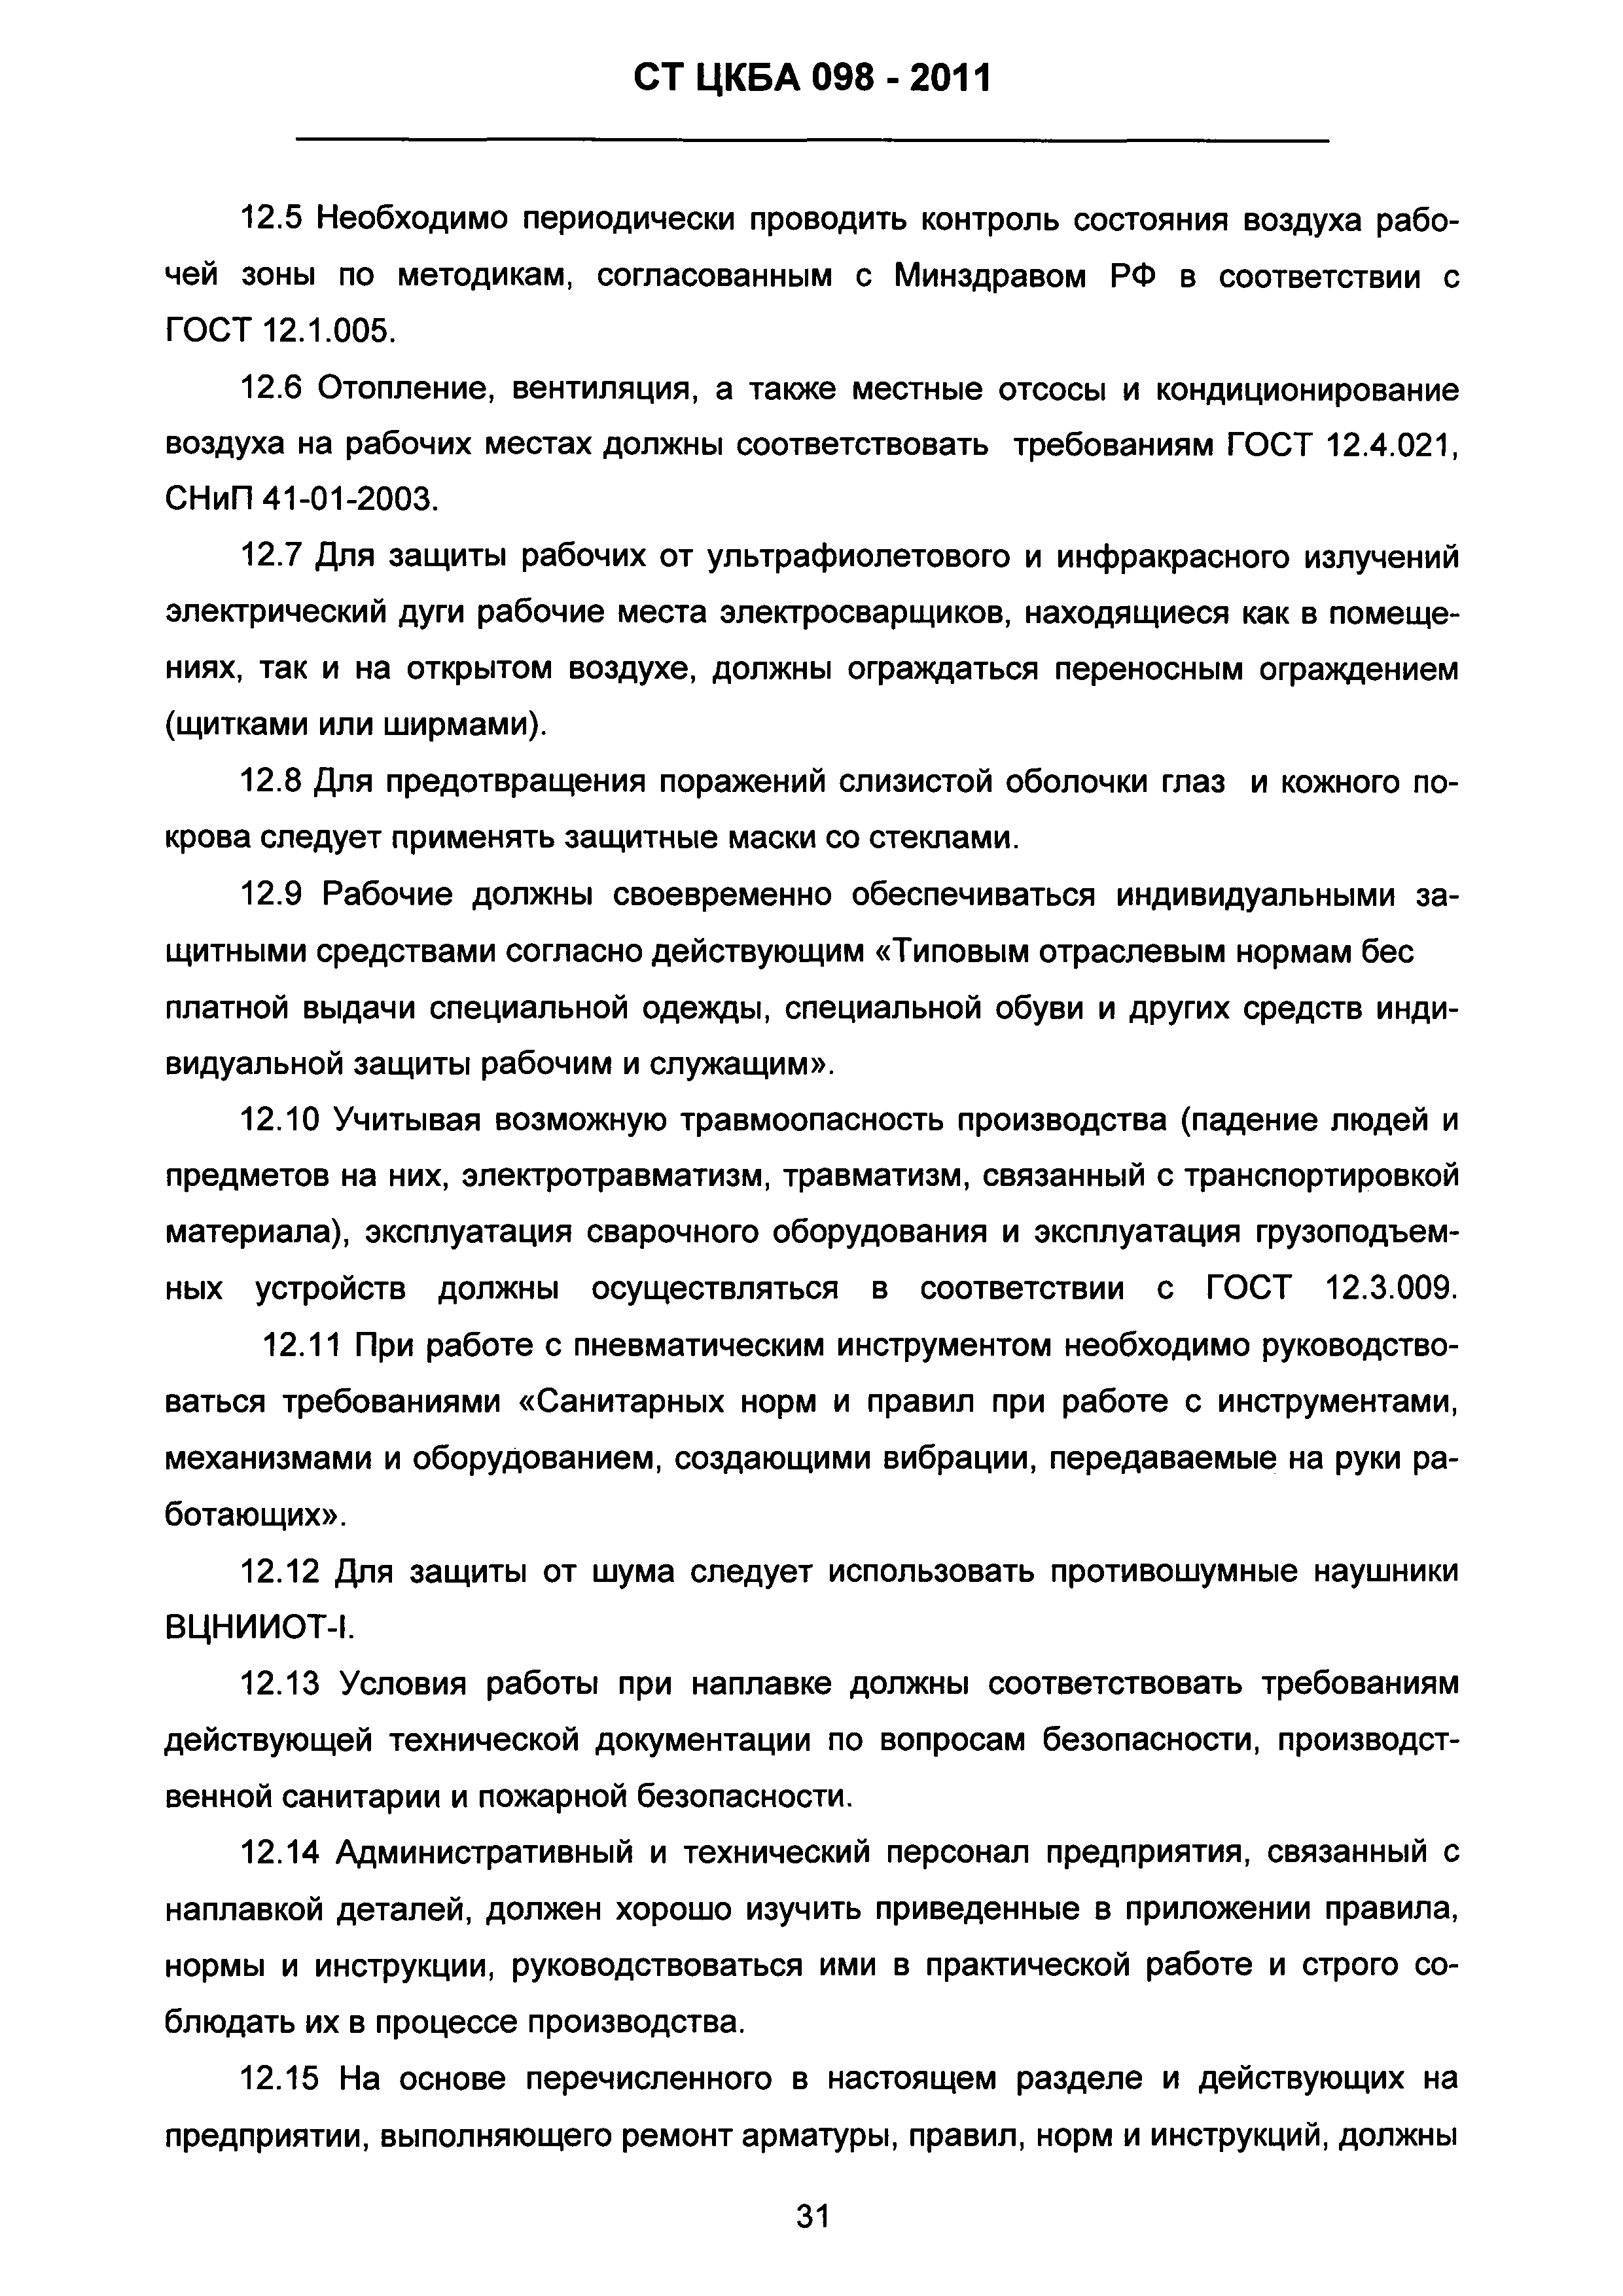 СТ ЦКБА 098-2011